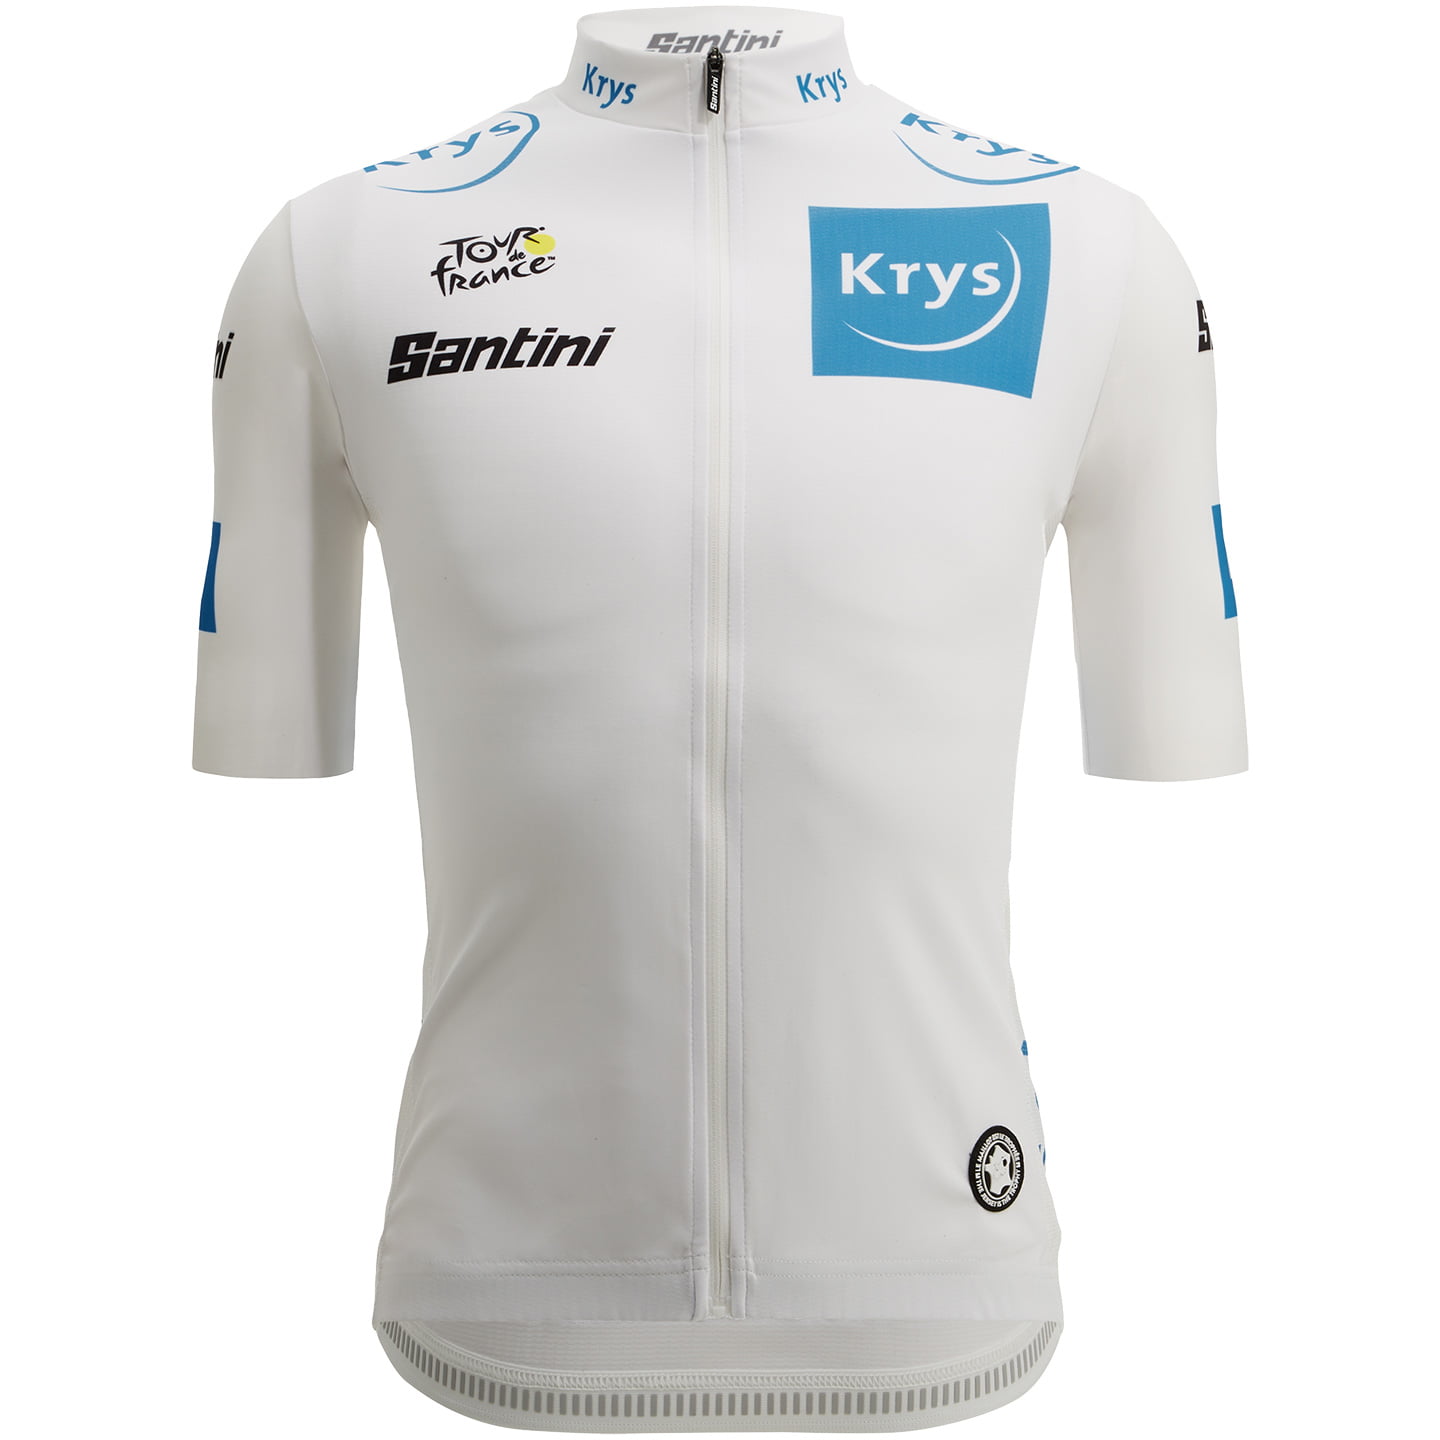 TOUR DE FRANCE Young Professional 2022 Short Sleeve Jersey, for men, size 2XL, Cycle shirt, Bike gear